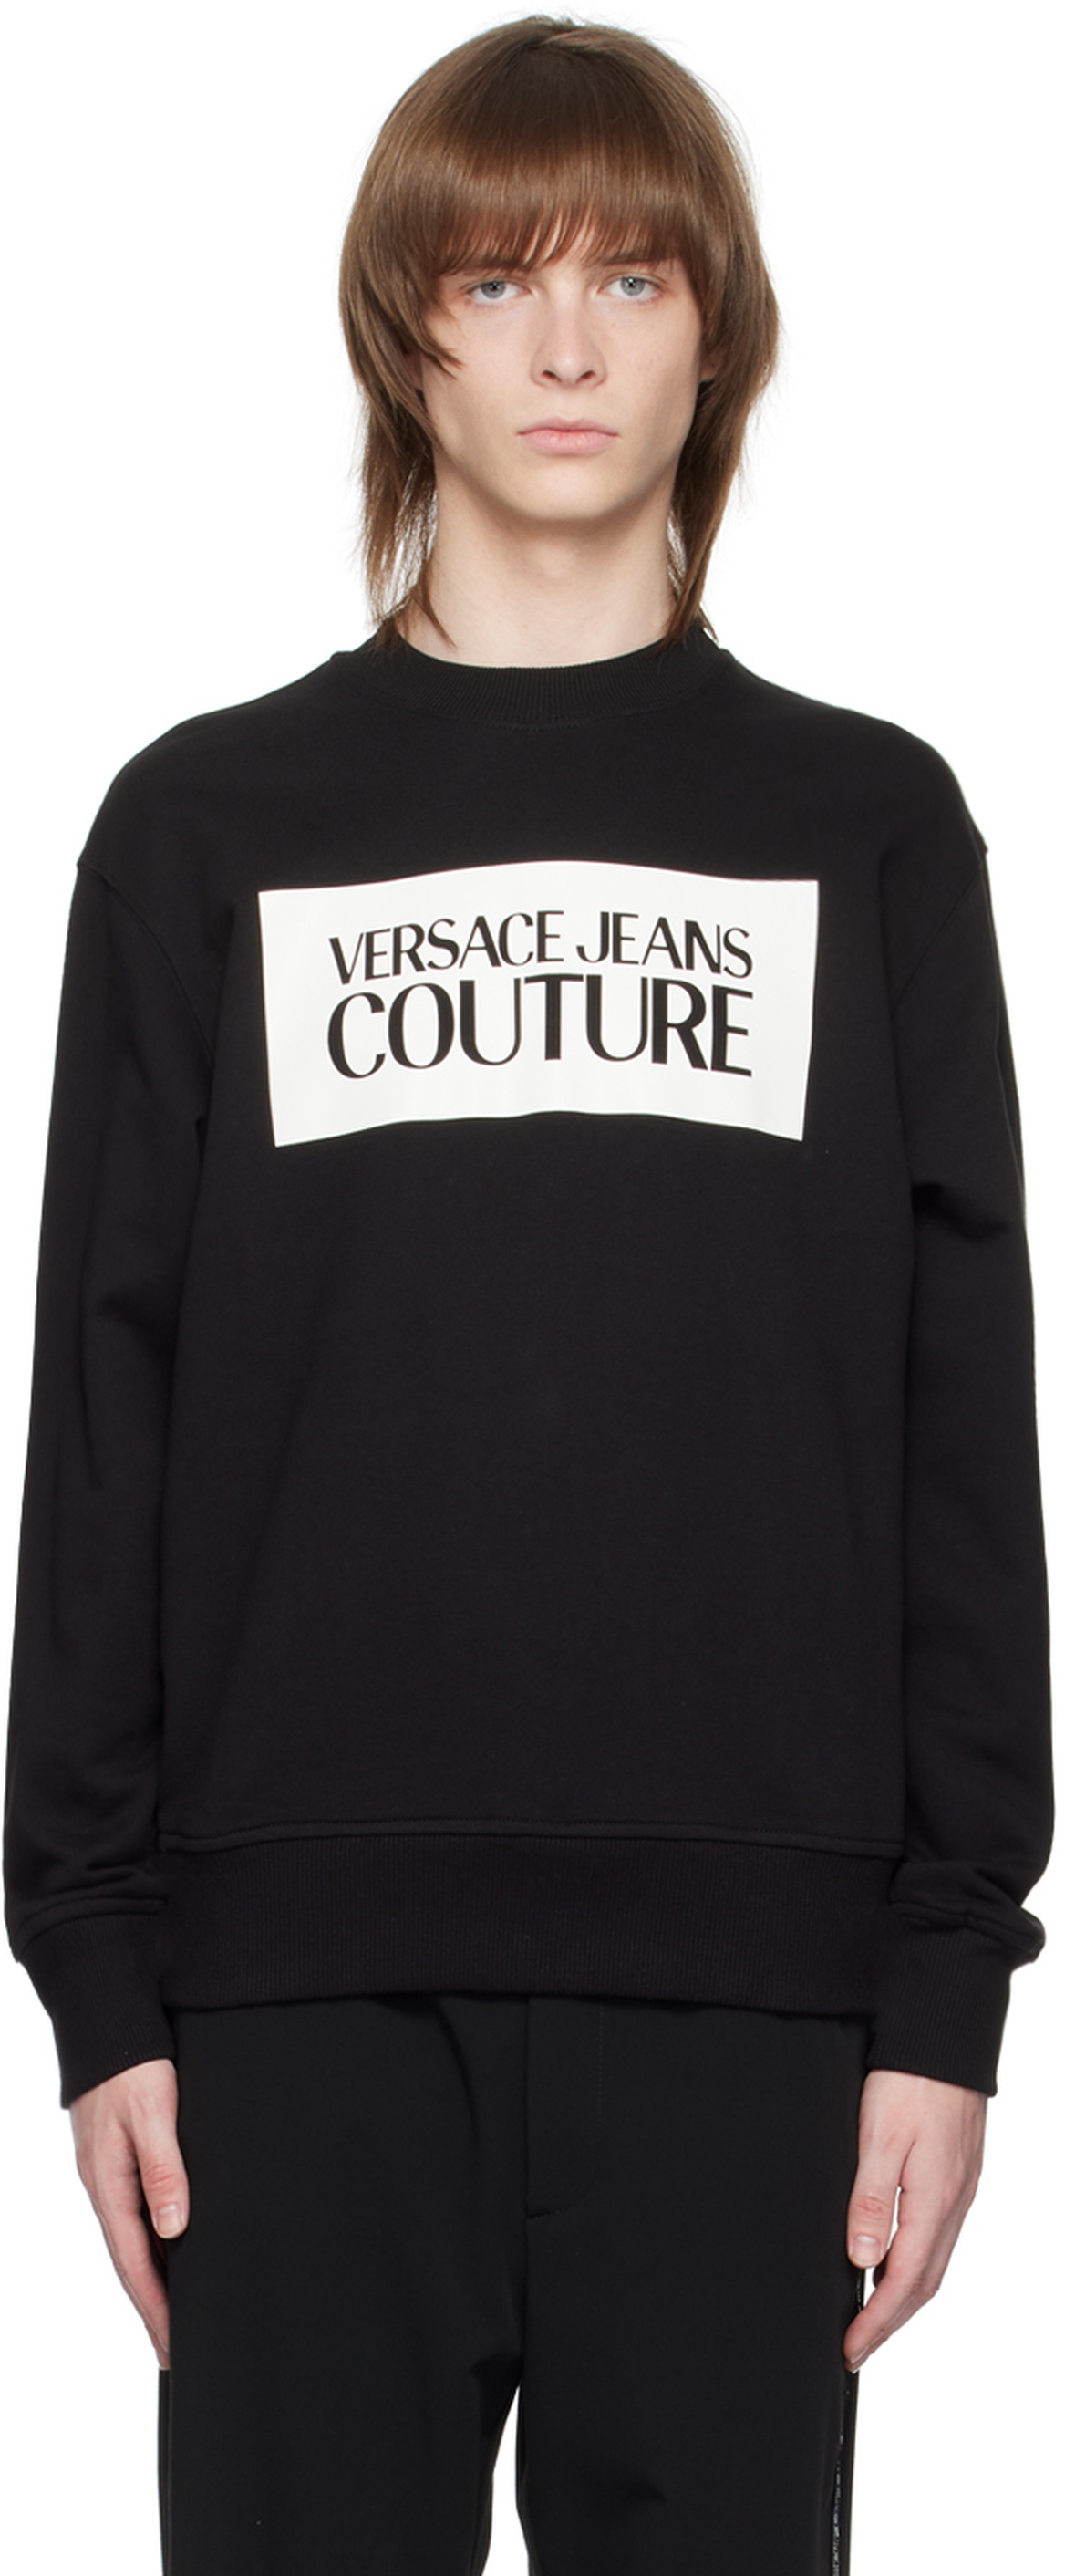 Versace Jeans Couture Black Printed Sweatshirt Versace